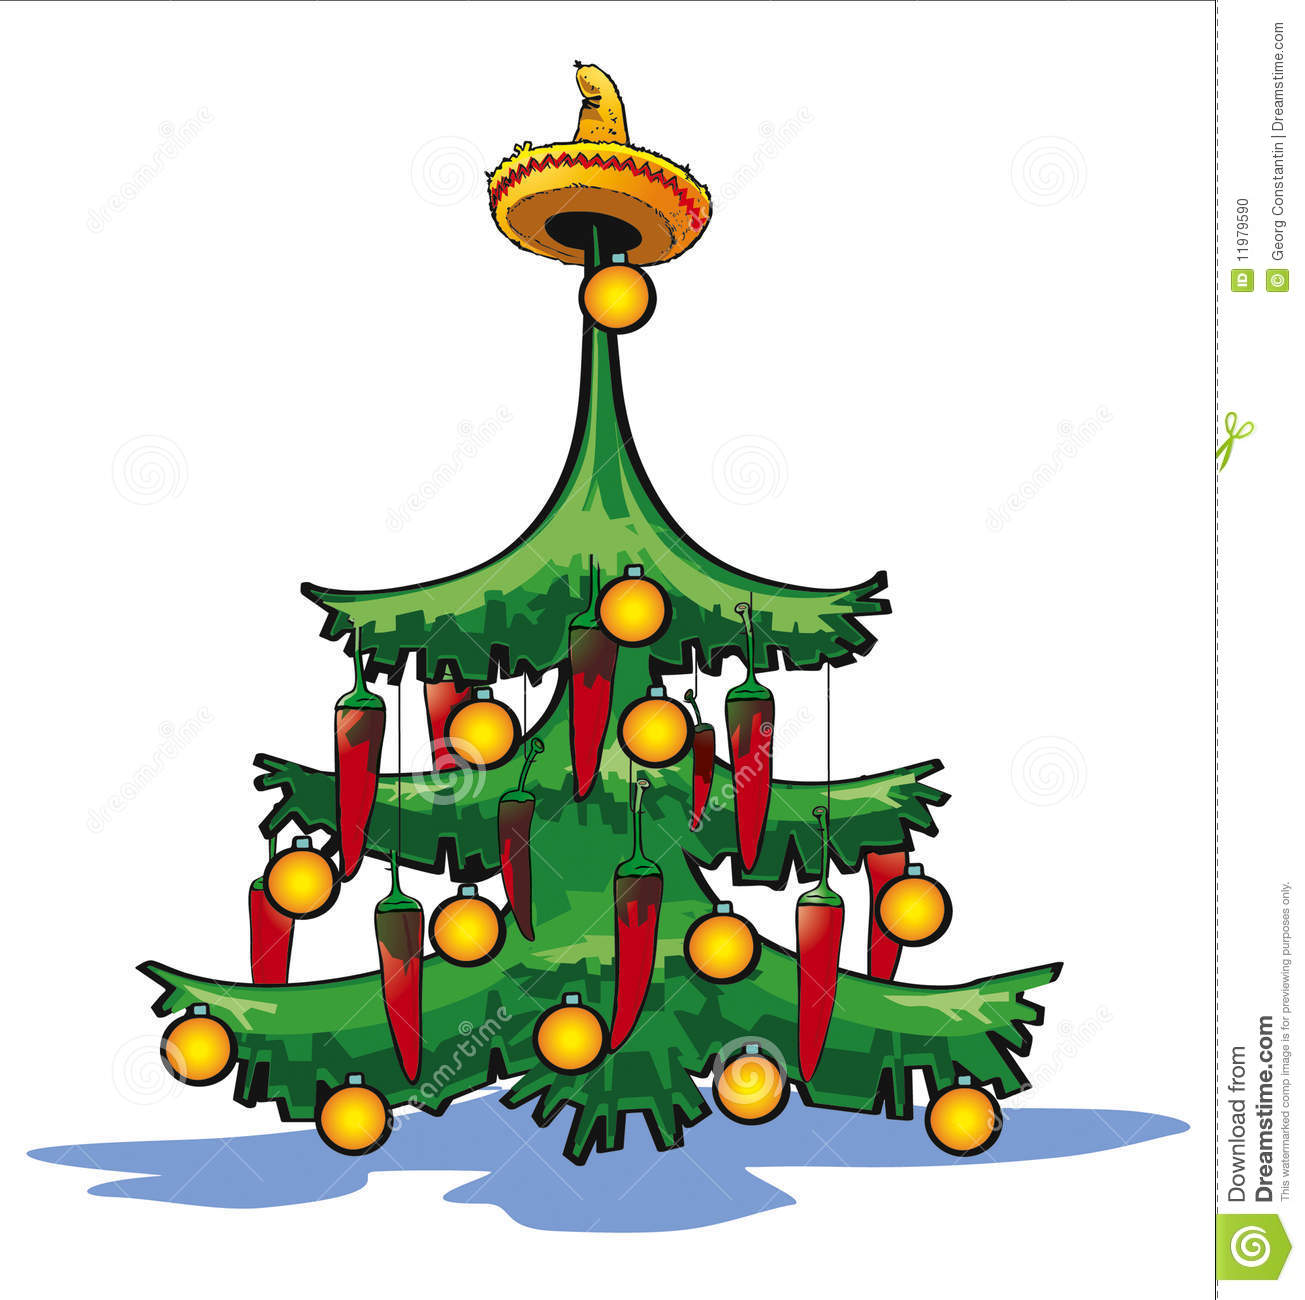 Chrismas Tree Full Of Christmas Ball Ornament With Sombrero On Top